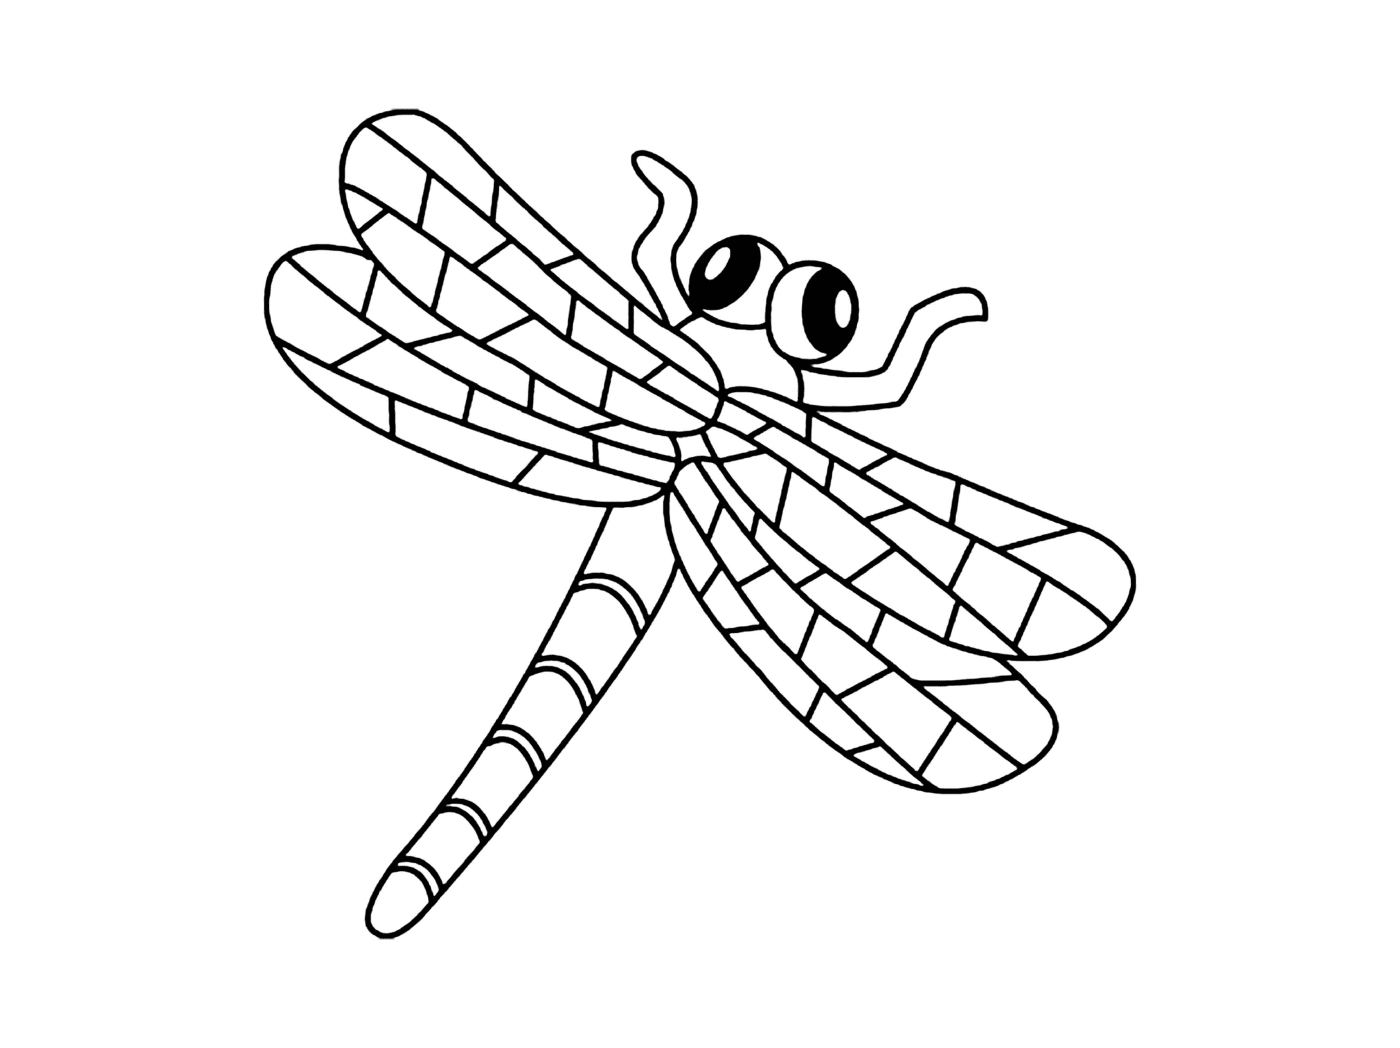   Facile : La libellule en maternelle 